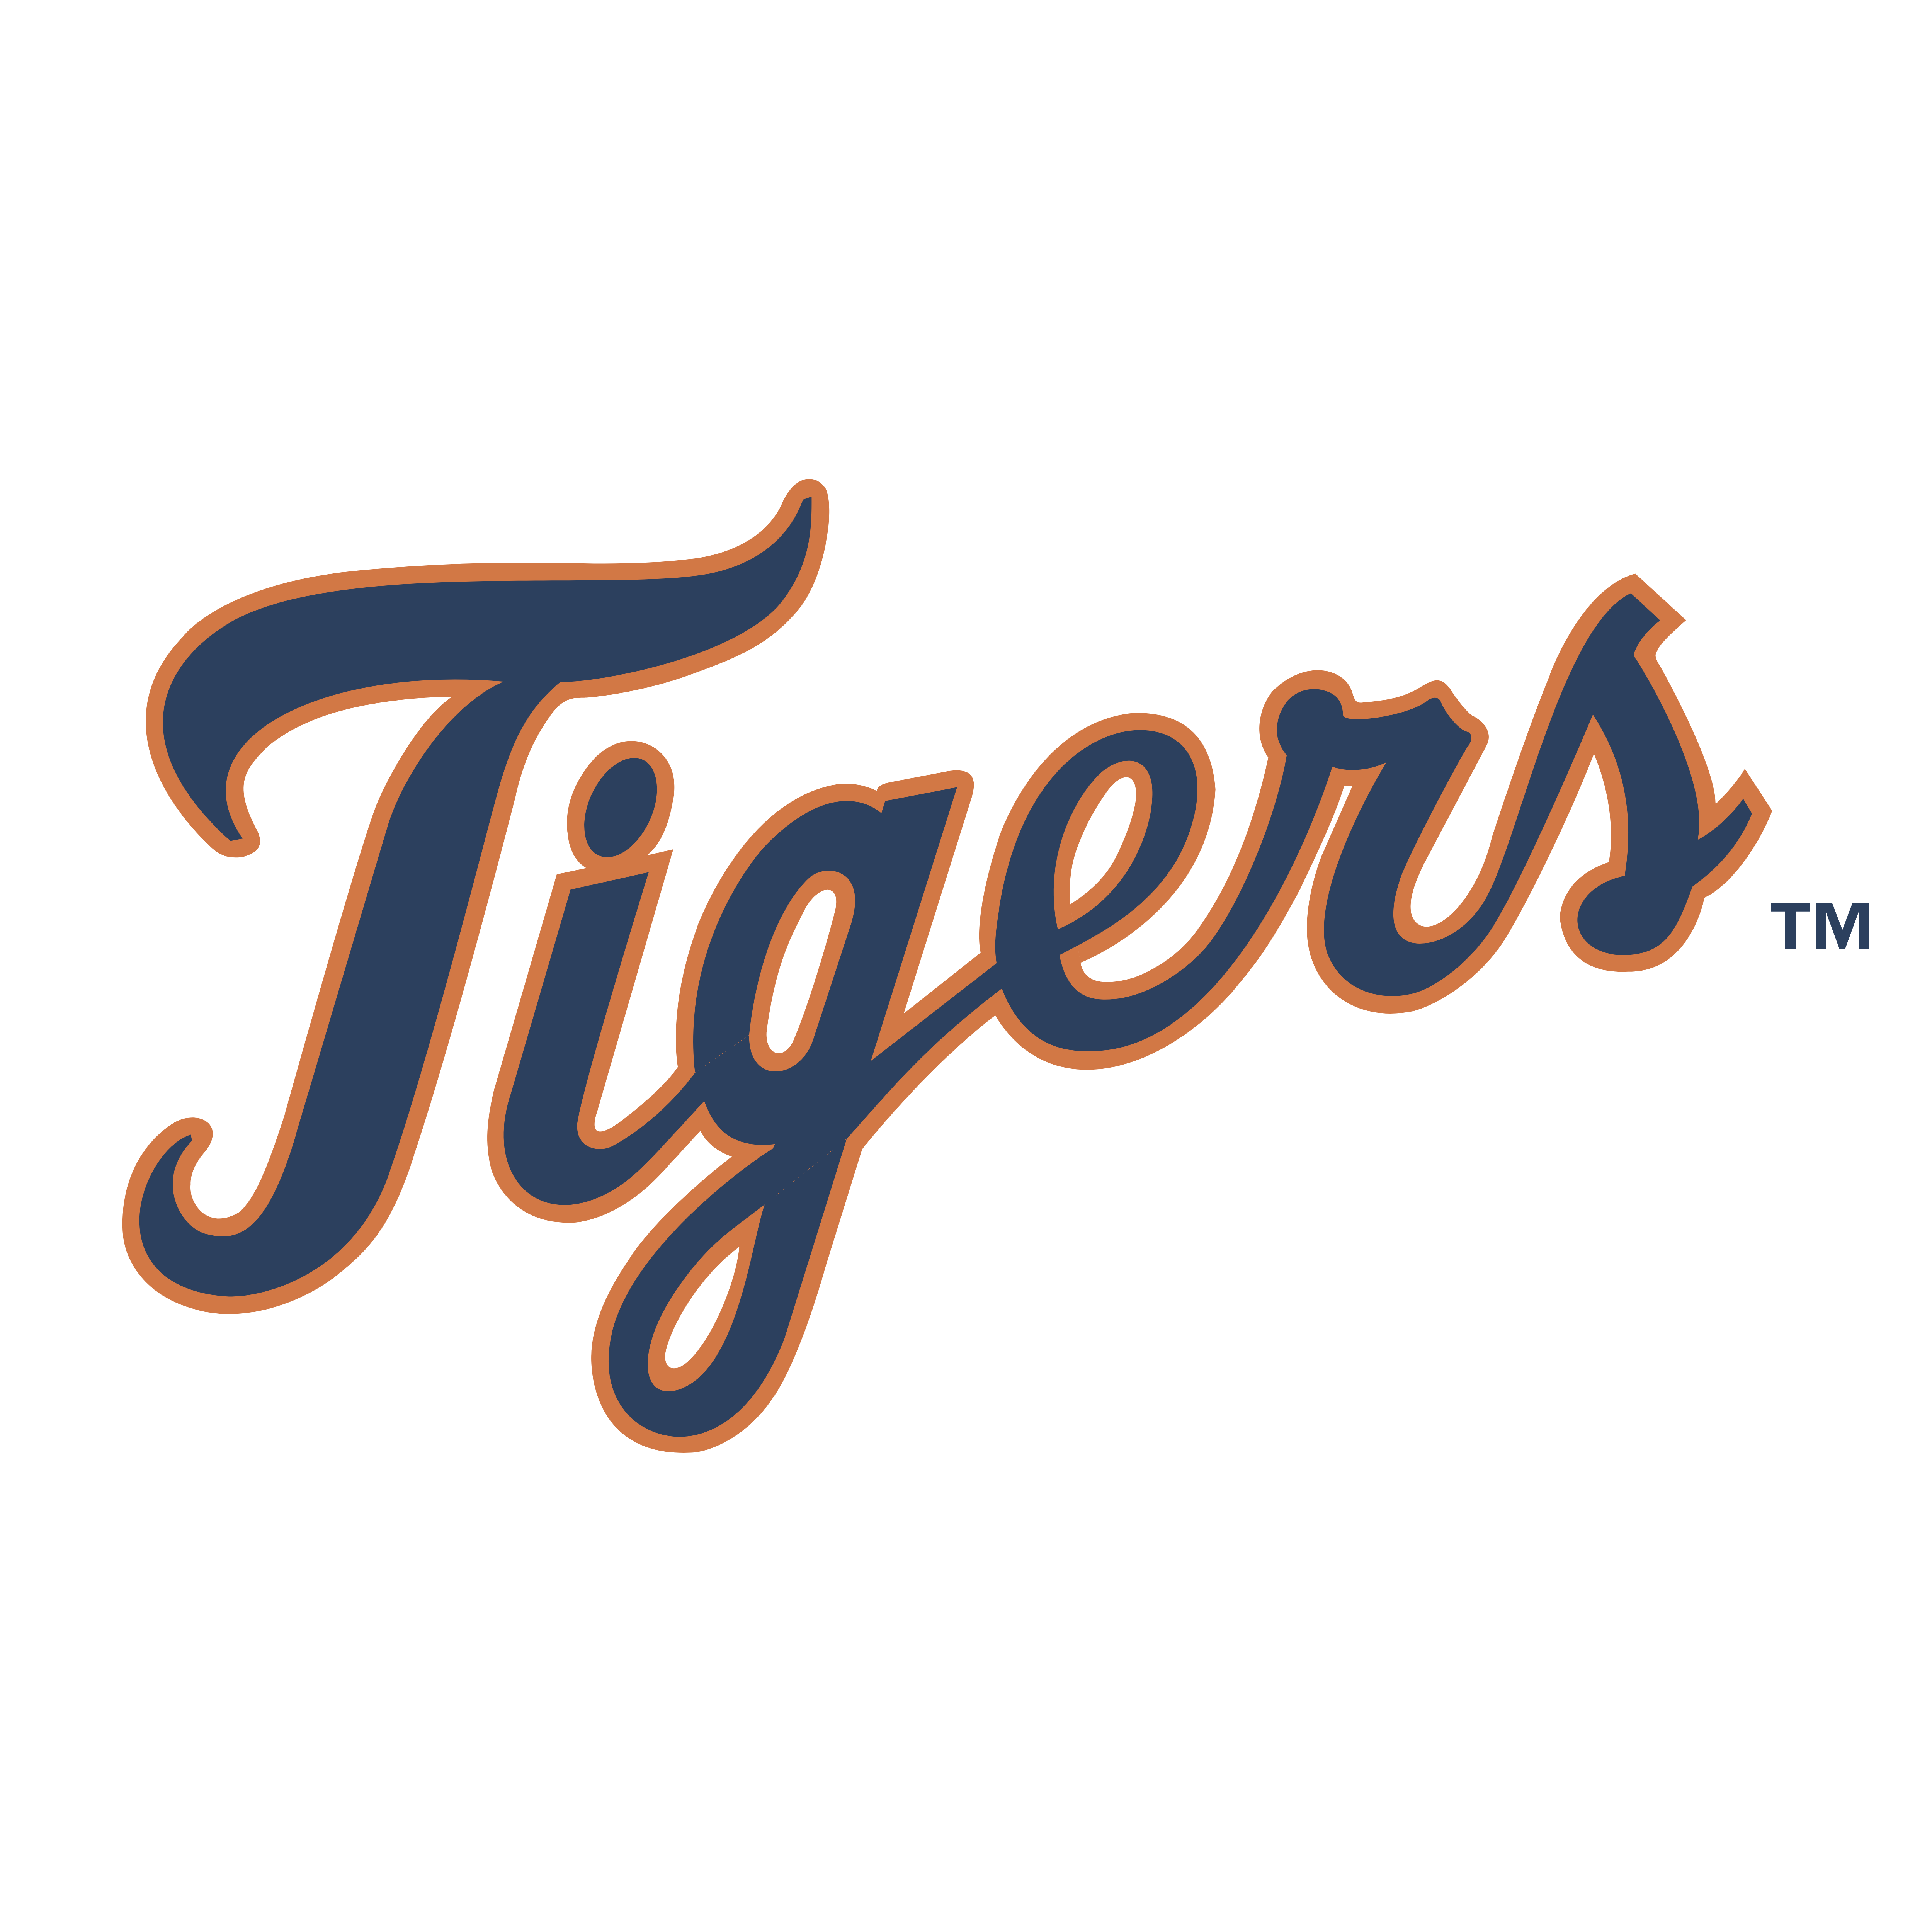 Detroit Tigers – Logos Download